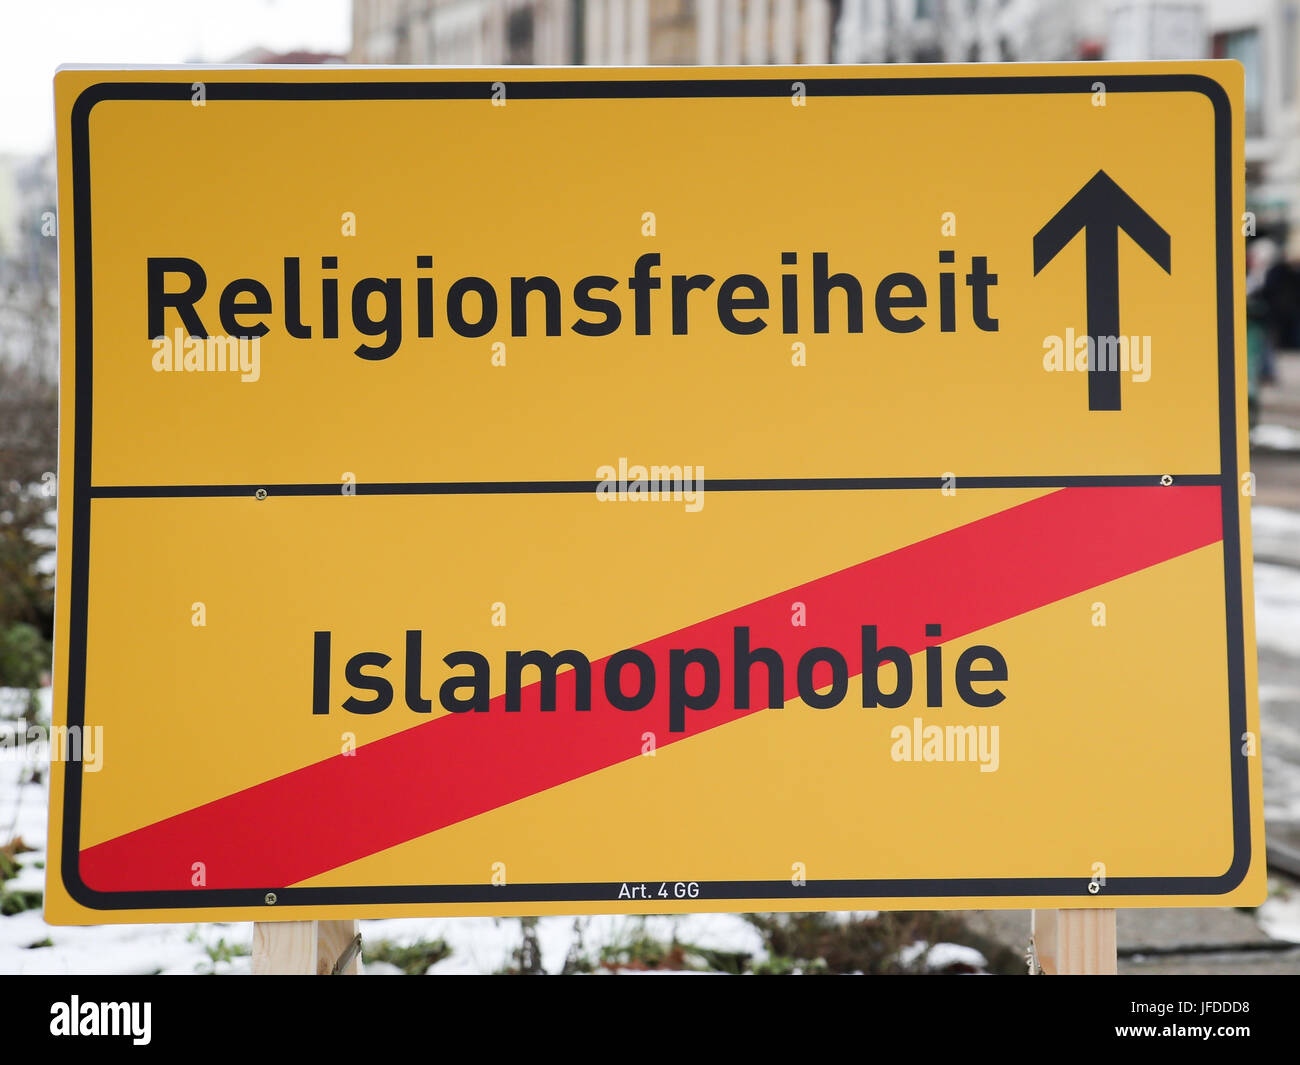 Religious freedom - Islamophobia Stock Photo